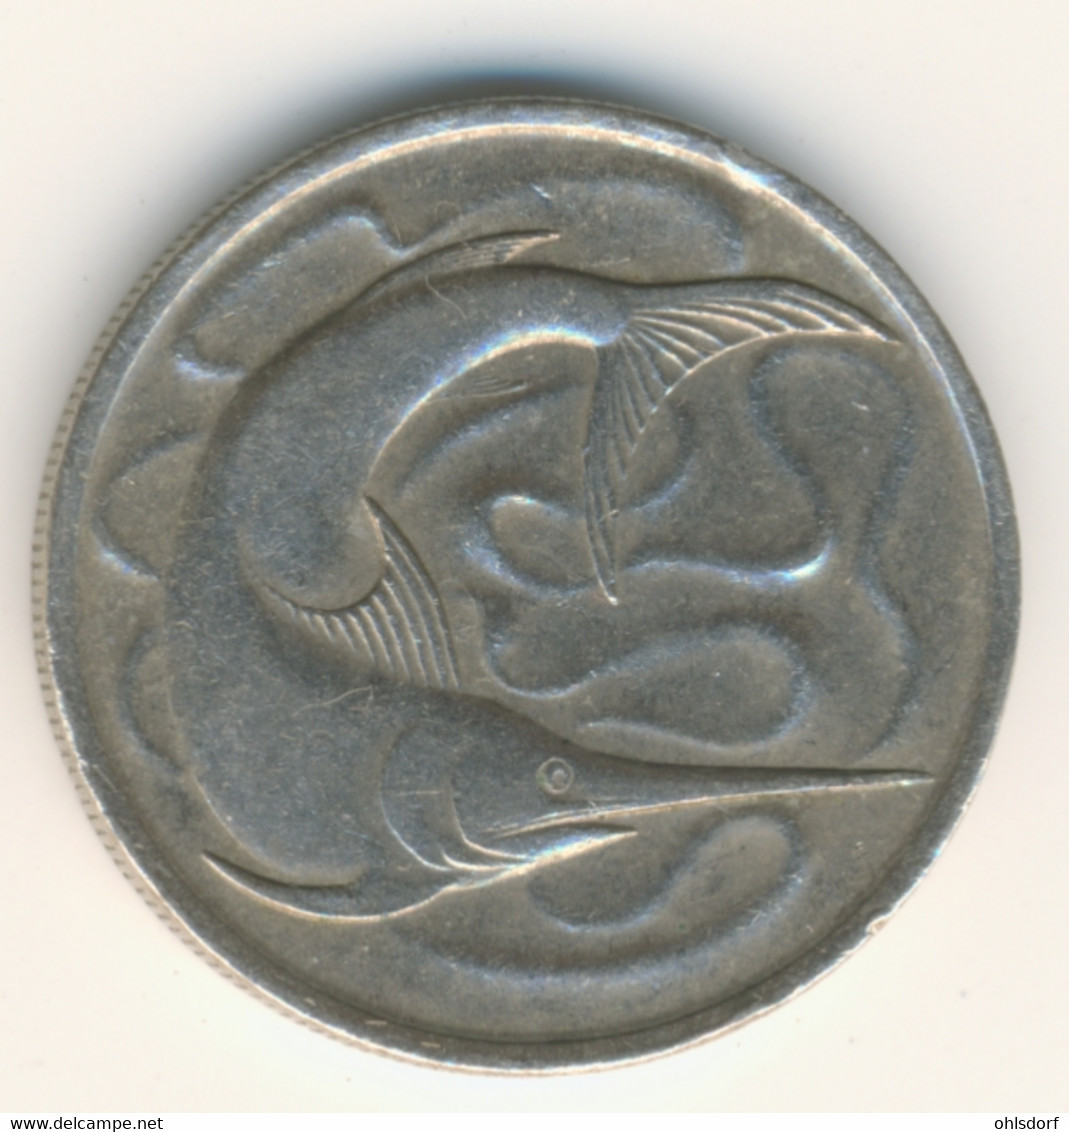 SINGAPORE 1970: 20 Cents, KM 4 - Singapore